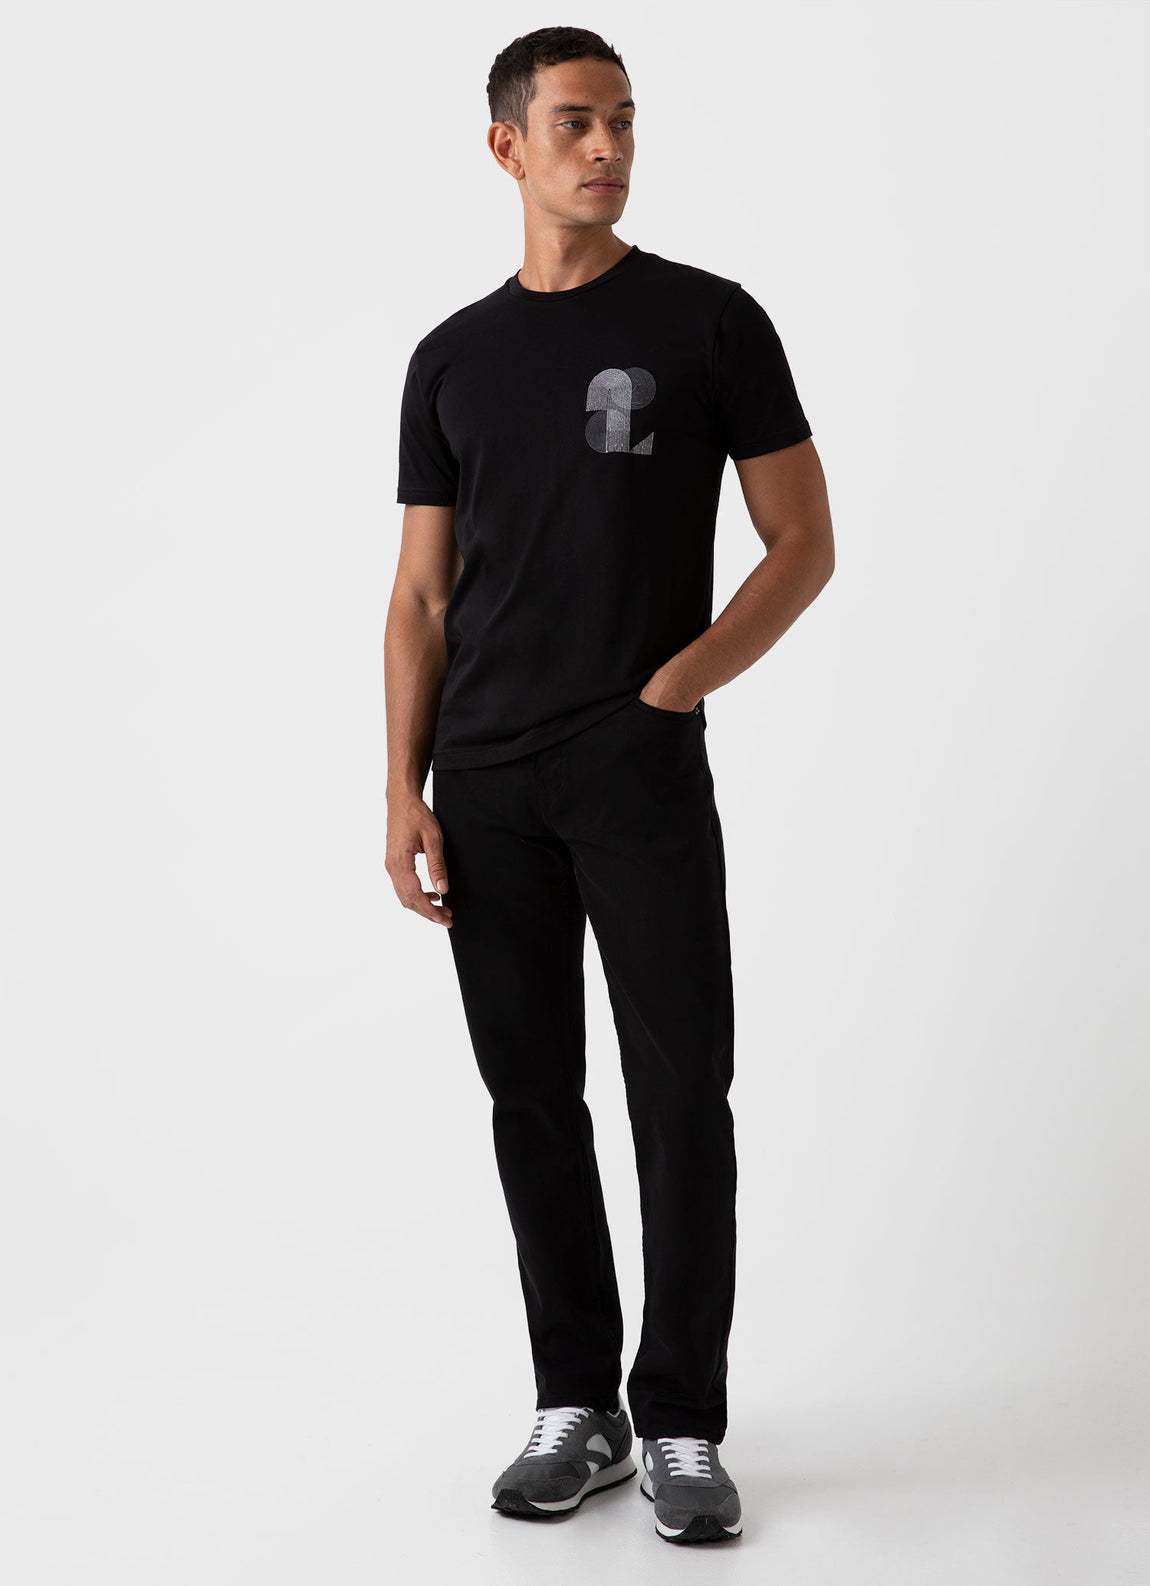 Men's Craig Ward Embroidered T-shirt in Black